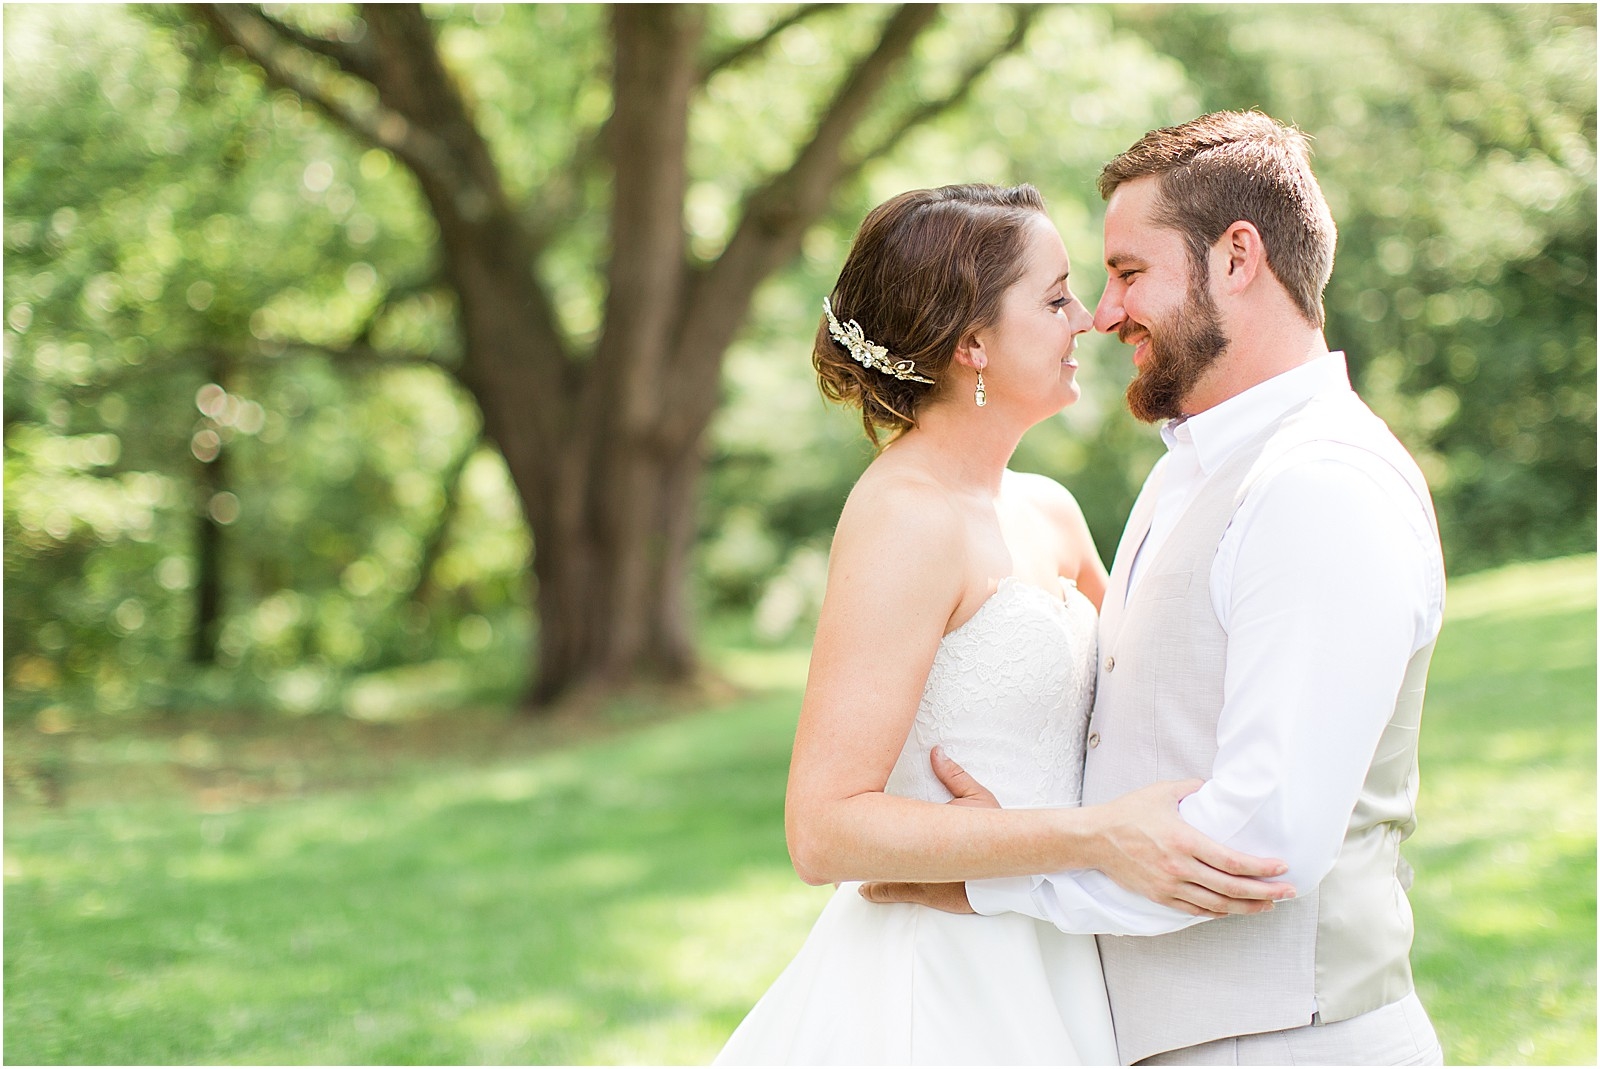 A Evansville Indiana Backyard Wedding | Bailey and Ben 027.jpg